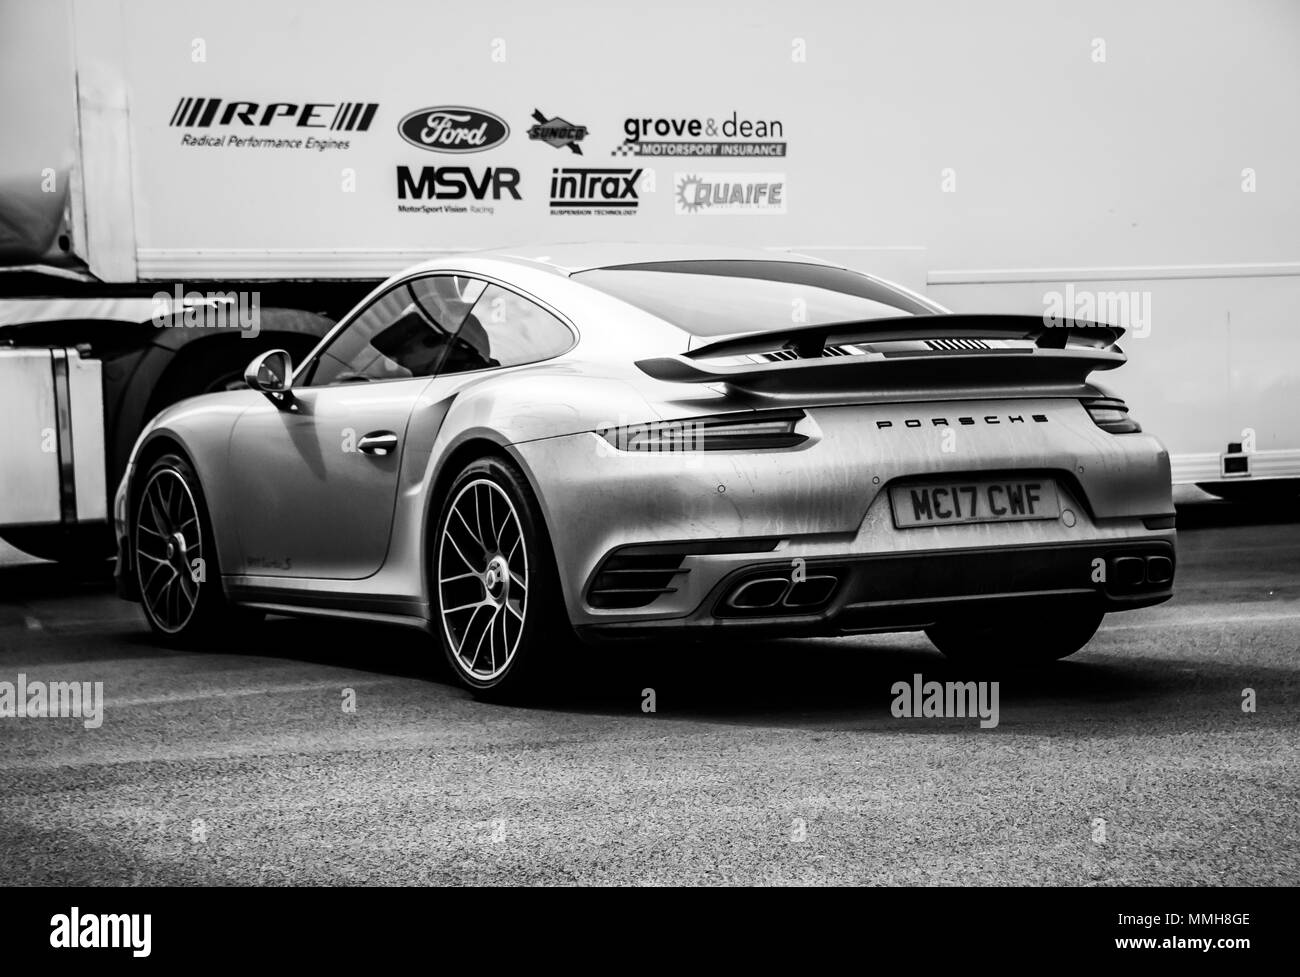 Porsche 911 Black and White Stock Photos & Images - Alamy